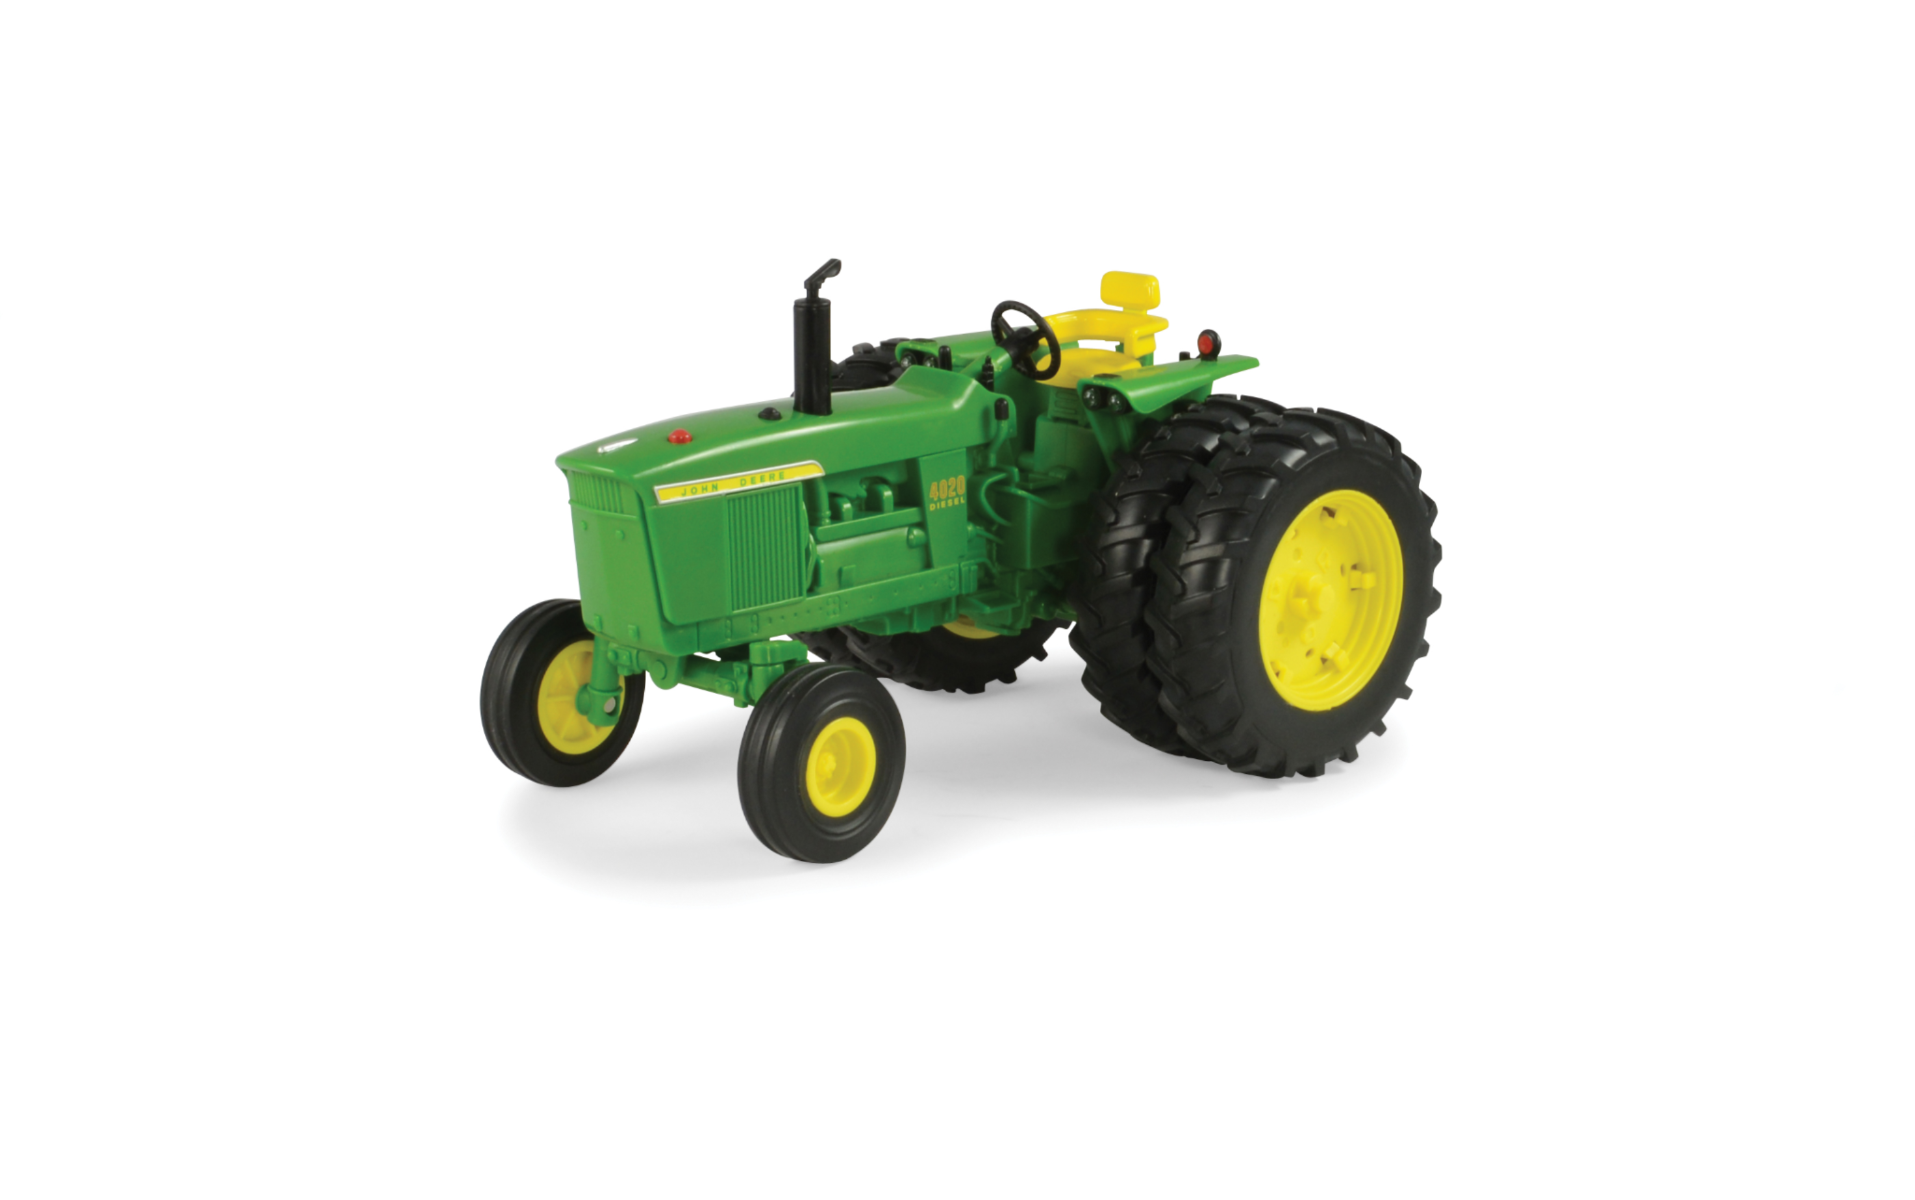 Ertl 1/16 Scale John Deere Big Farm 4020 Tractor 46292 